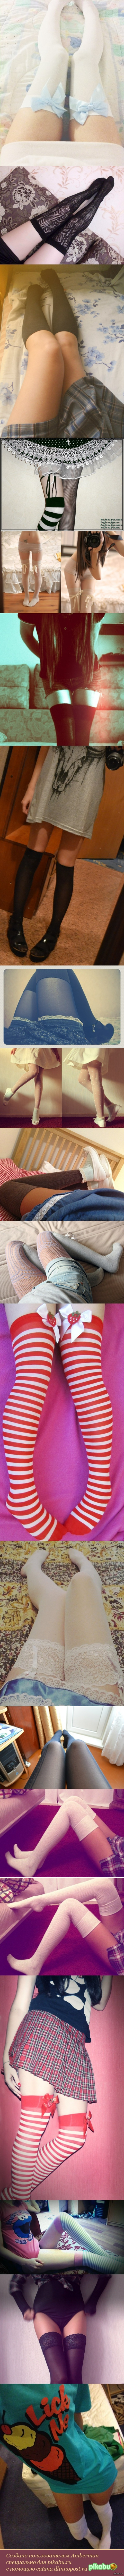 Compilation of female legs in stockings 2 part - Socks, Girls, Fetishism, Legs, Knee socks, Stockings, Longpost, Zettai ryouiki, NSFW